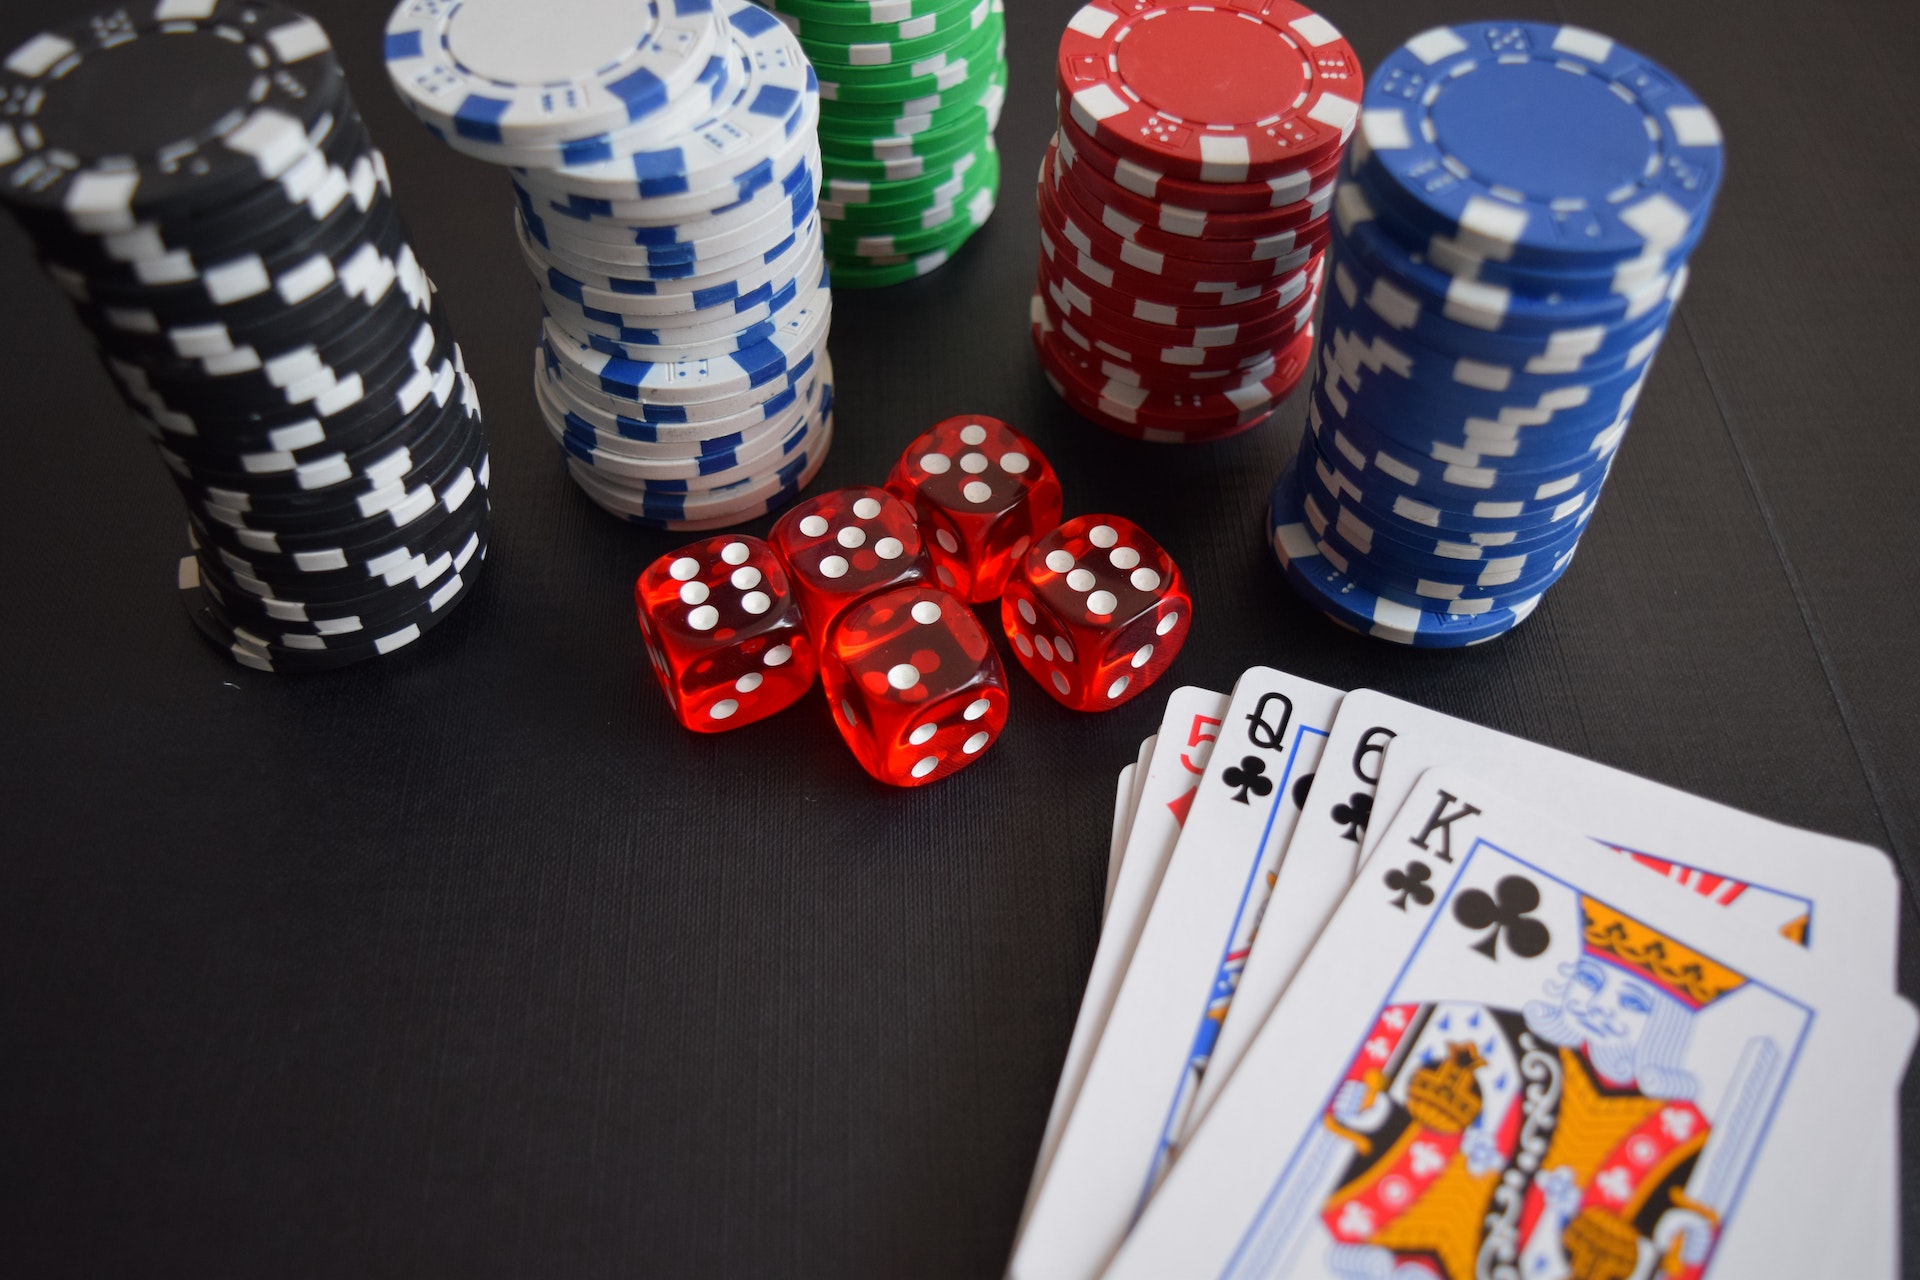 Países onde é ilegal jogar poker - Mundo